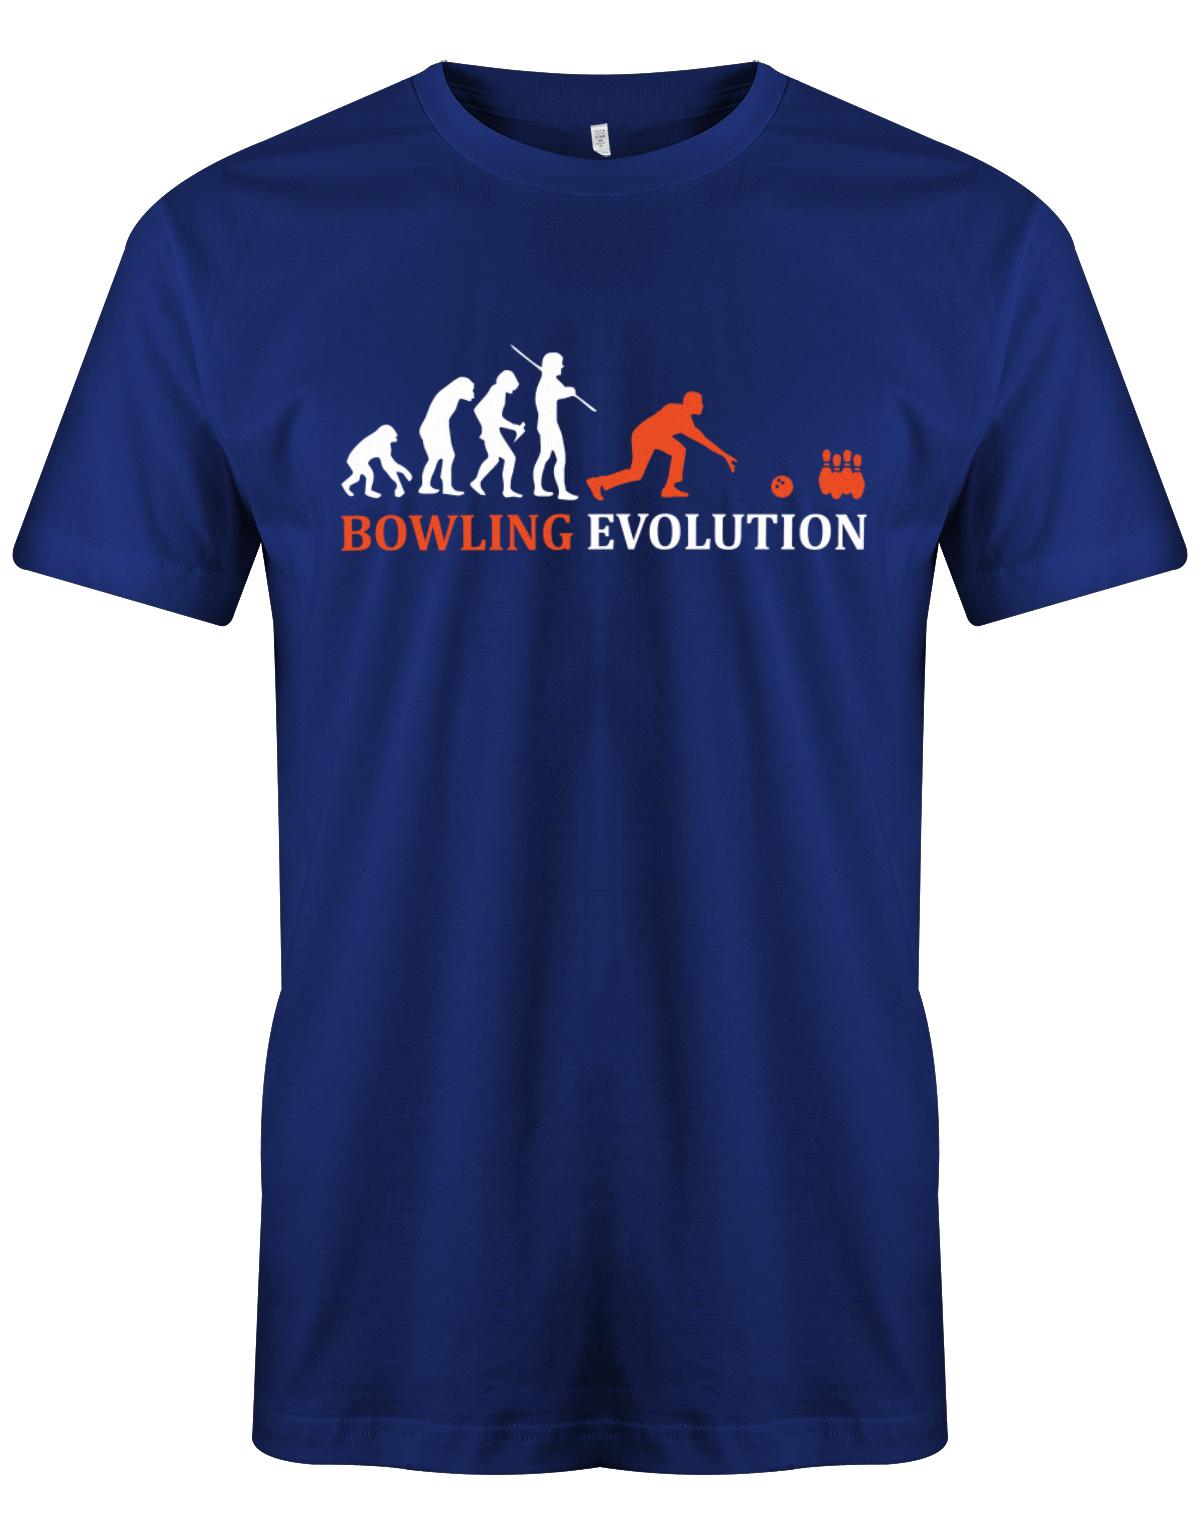 Bowling-Evolution-Bowler-Herren-Shirt-Royalblau